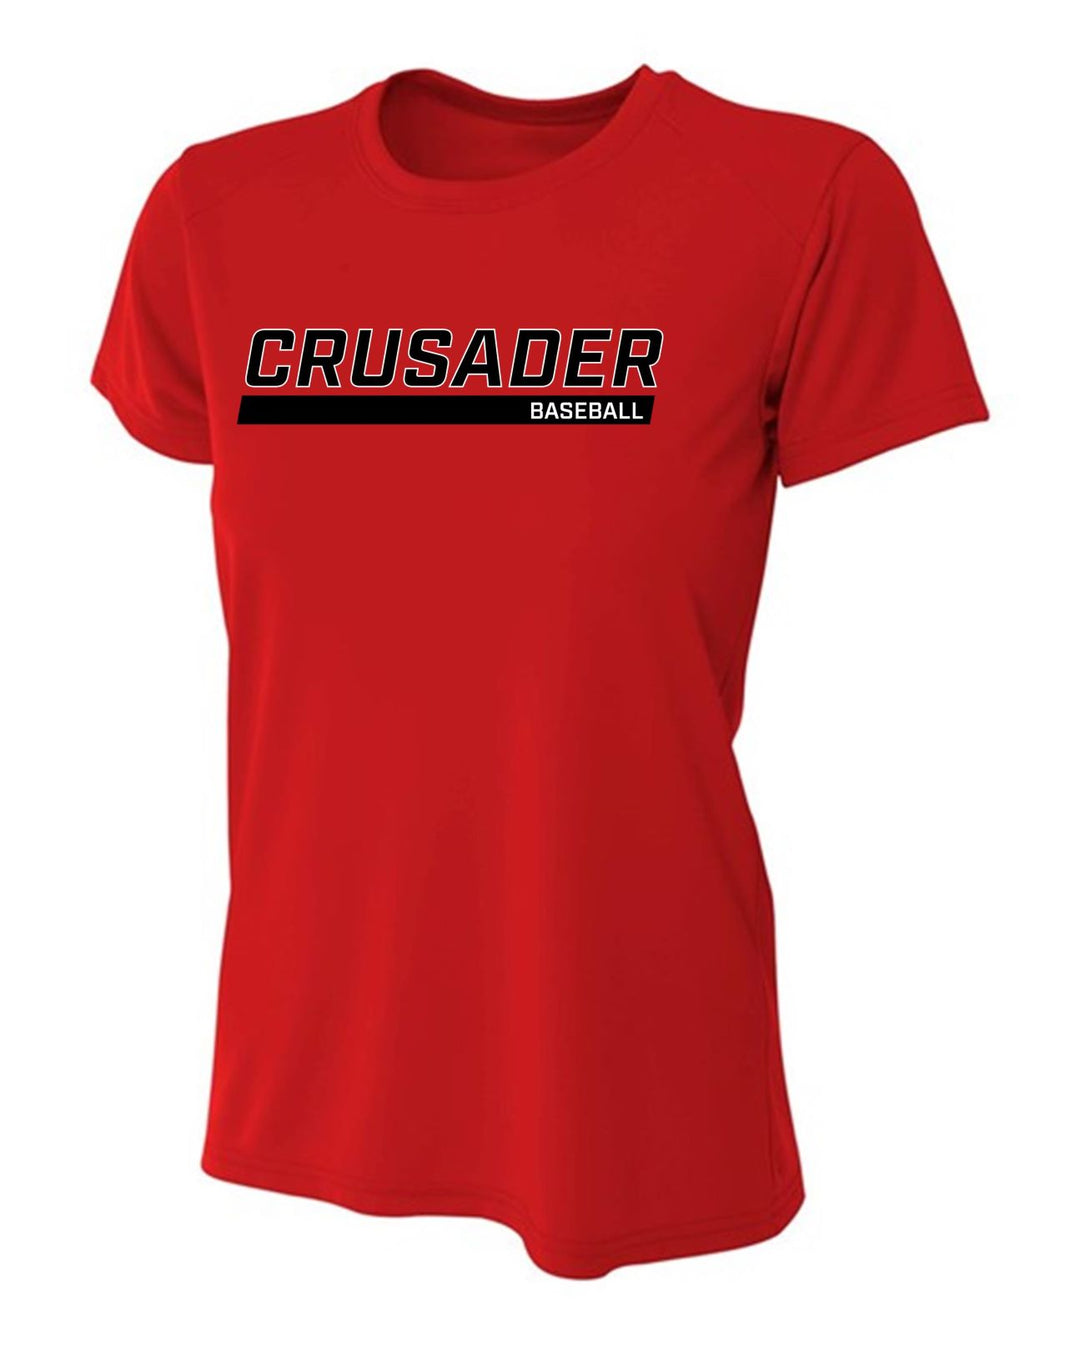 WCU Baseball Women's Short-Sleeve Performance Shirt WCU Baseball Red CRUSADER - Third Coast Soccer